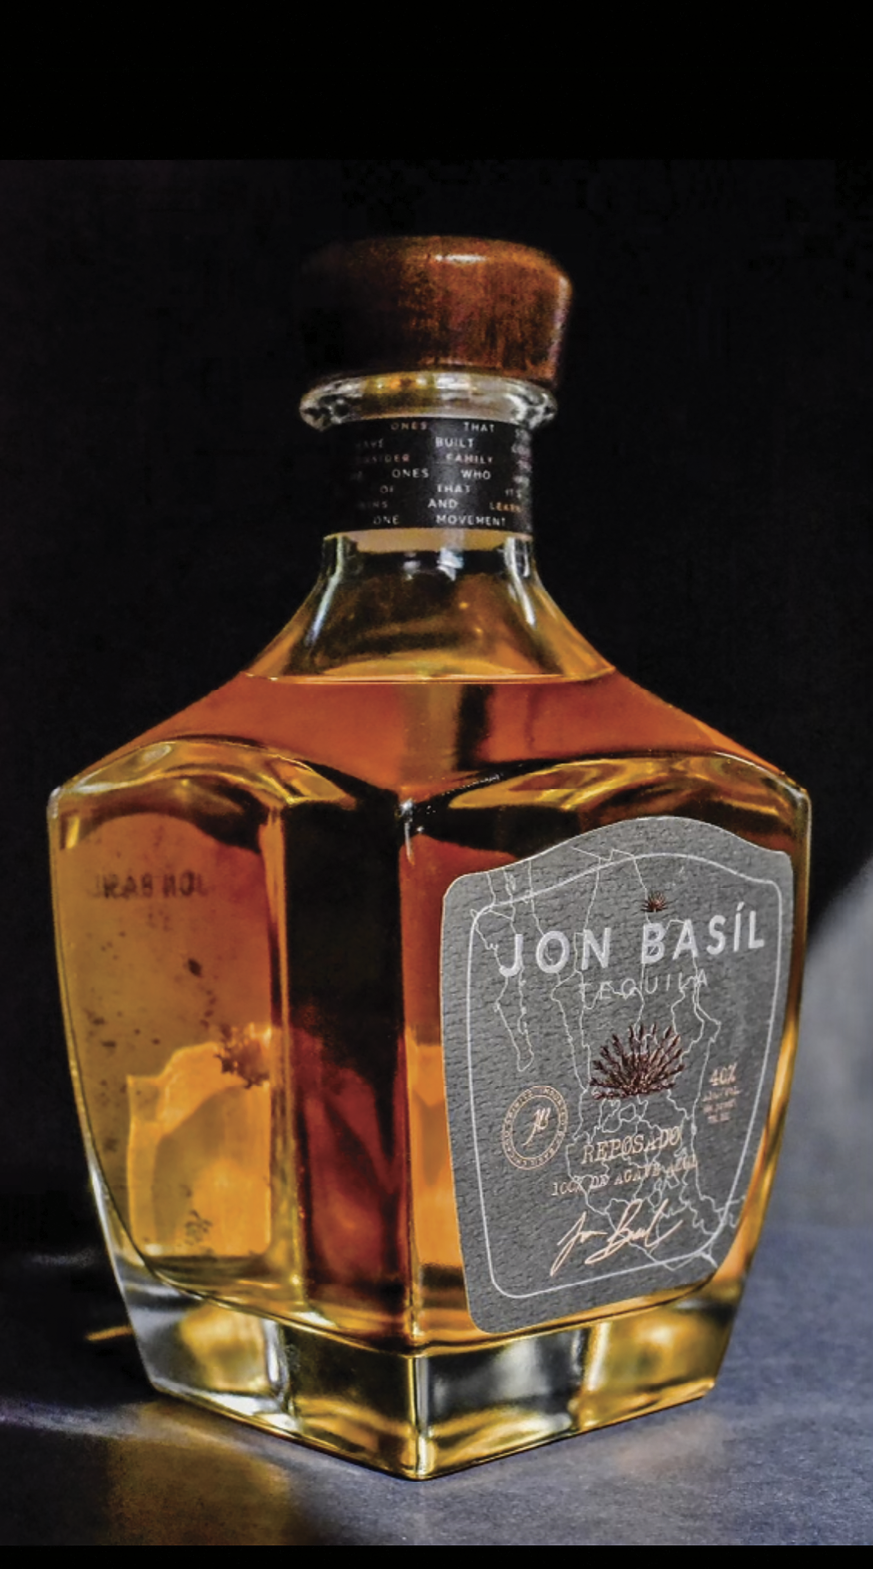 Jon Basil Tequila